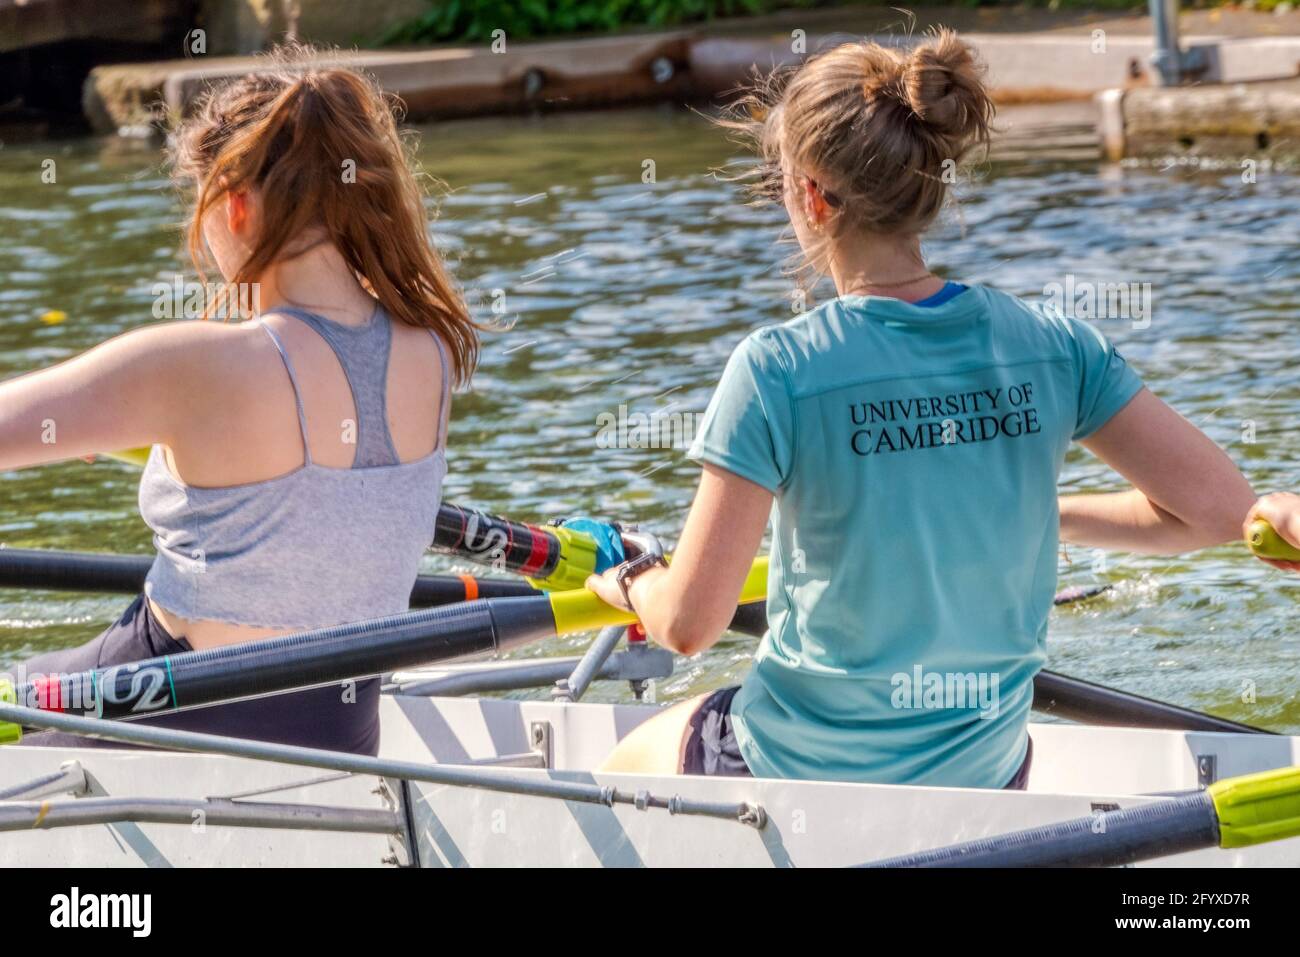 Oarswomen, women rowers from Cambridge University, practising on the River Cam, Cambridge, UK Stock Photo